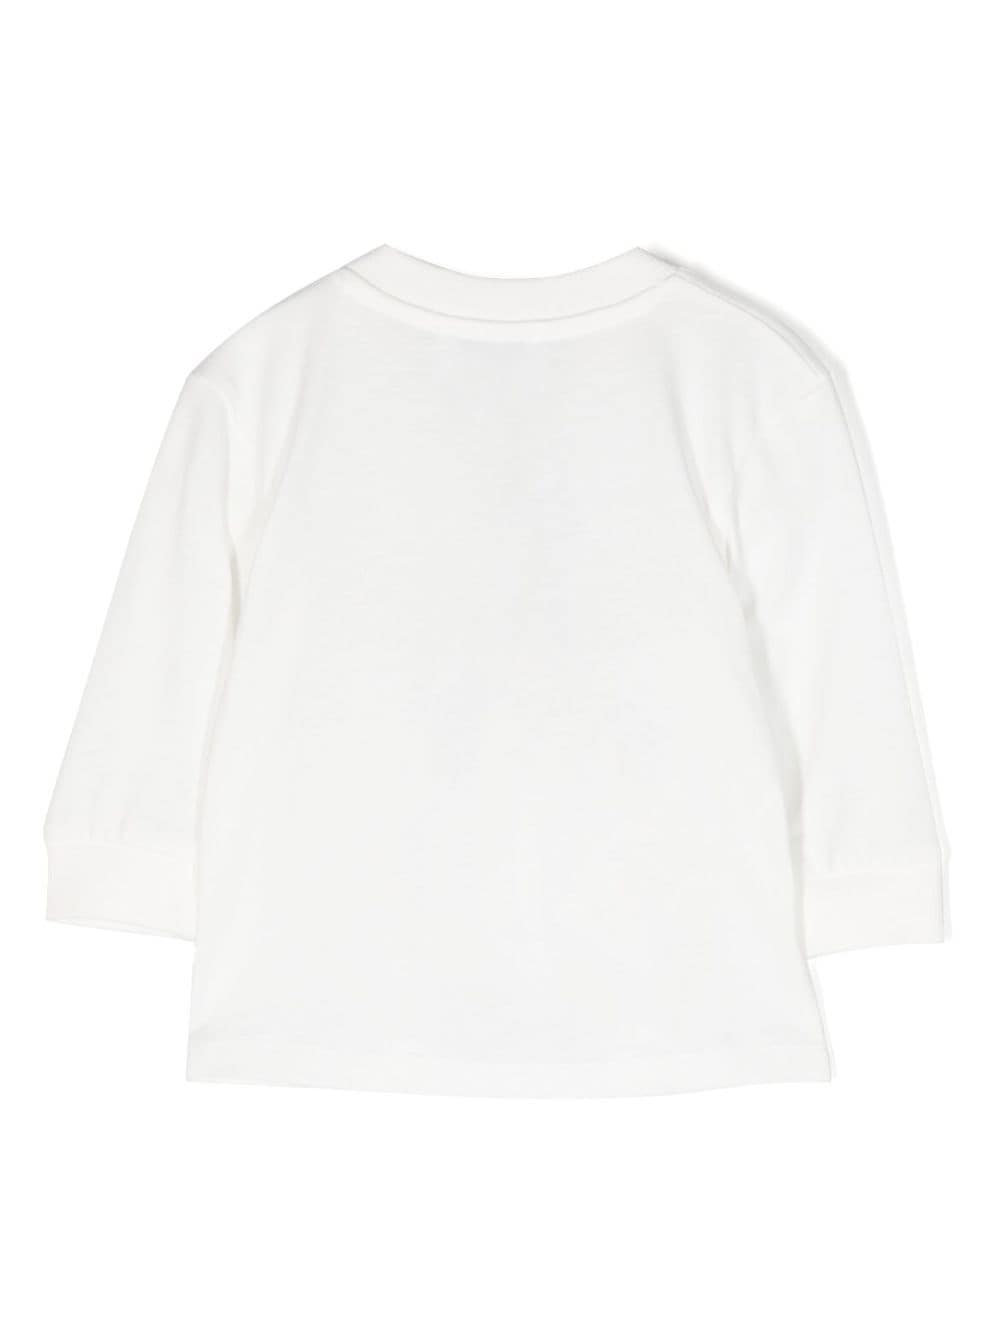 White cotton jersey baby boy KENZO t-shirt | Carofiglio Junior